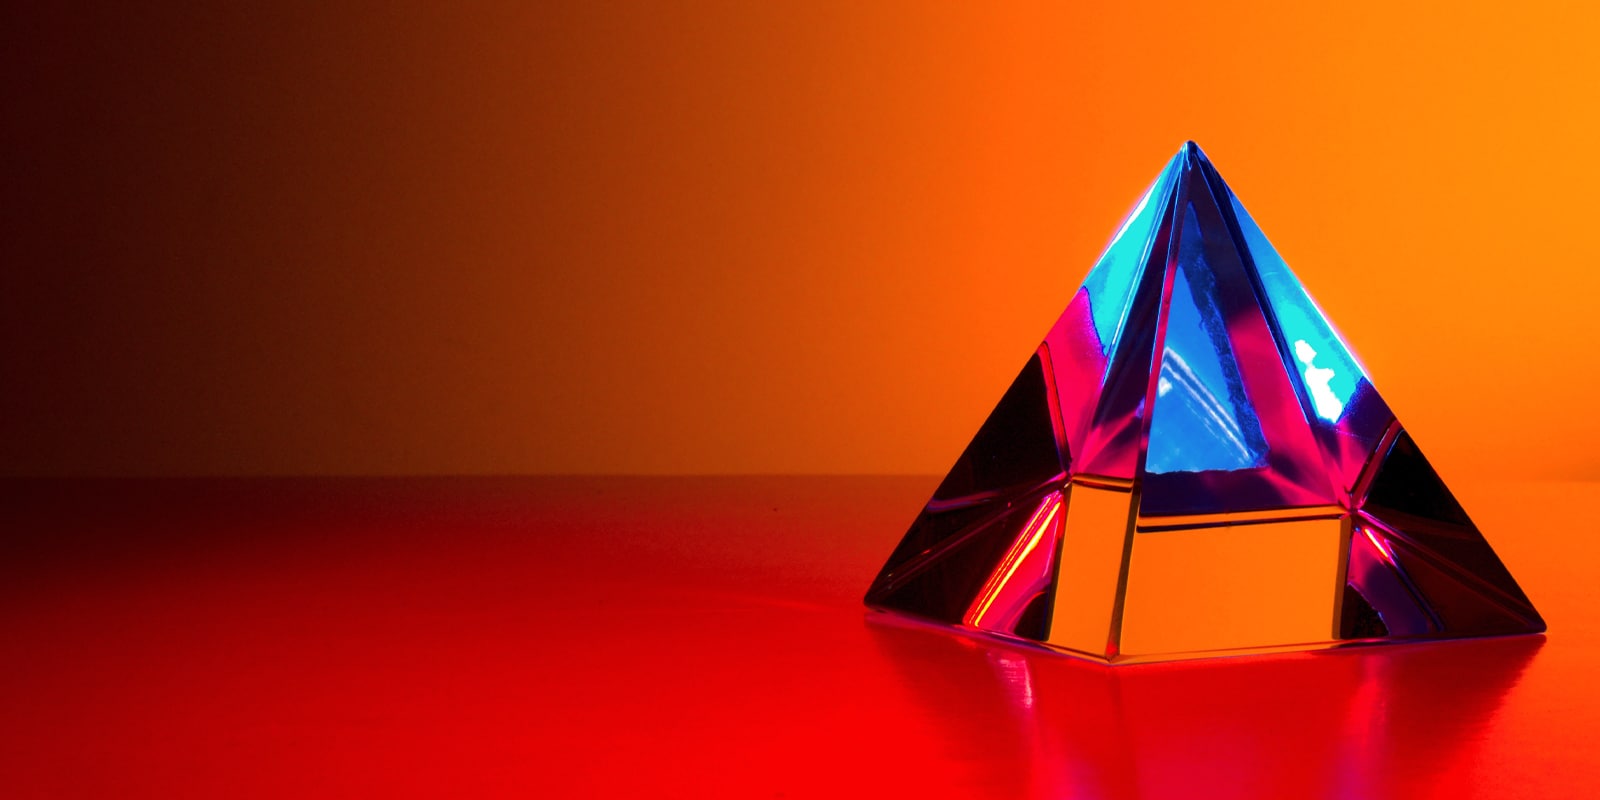 An image of a pyramid diamond - A-level Physics